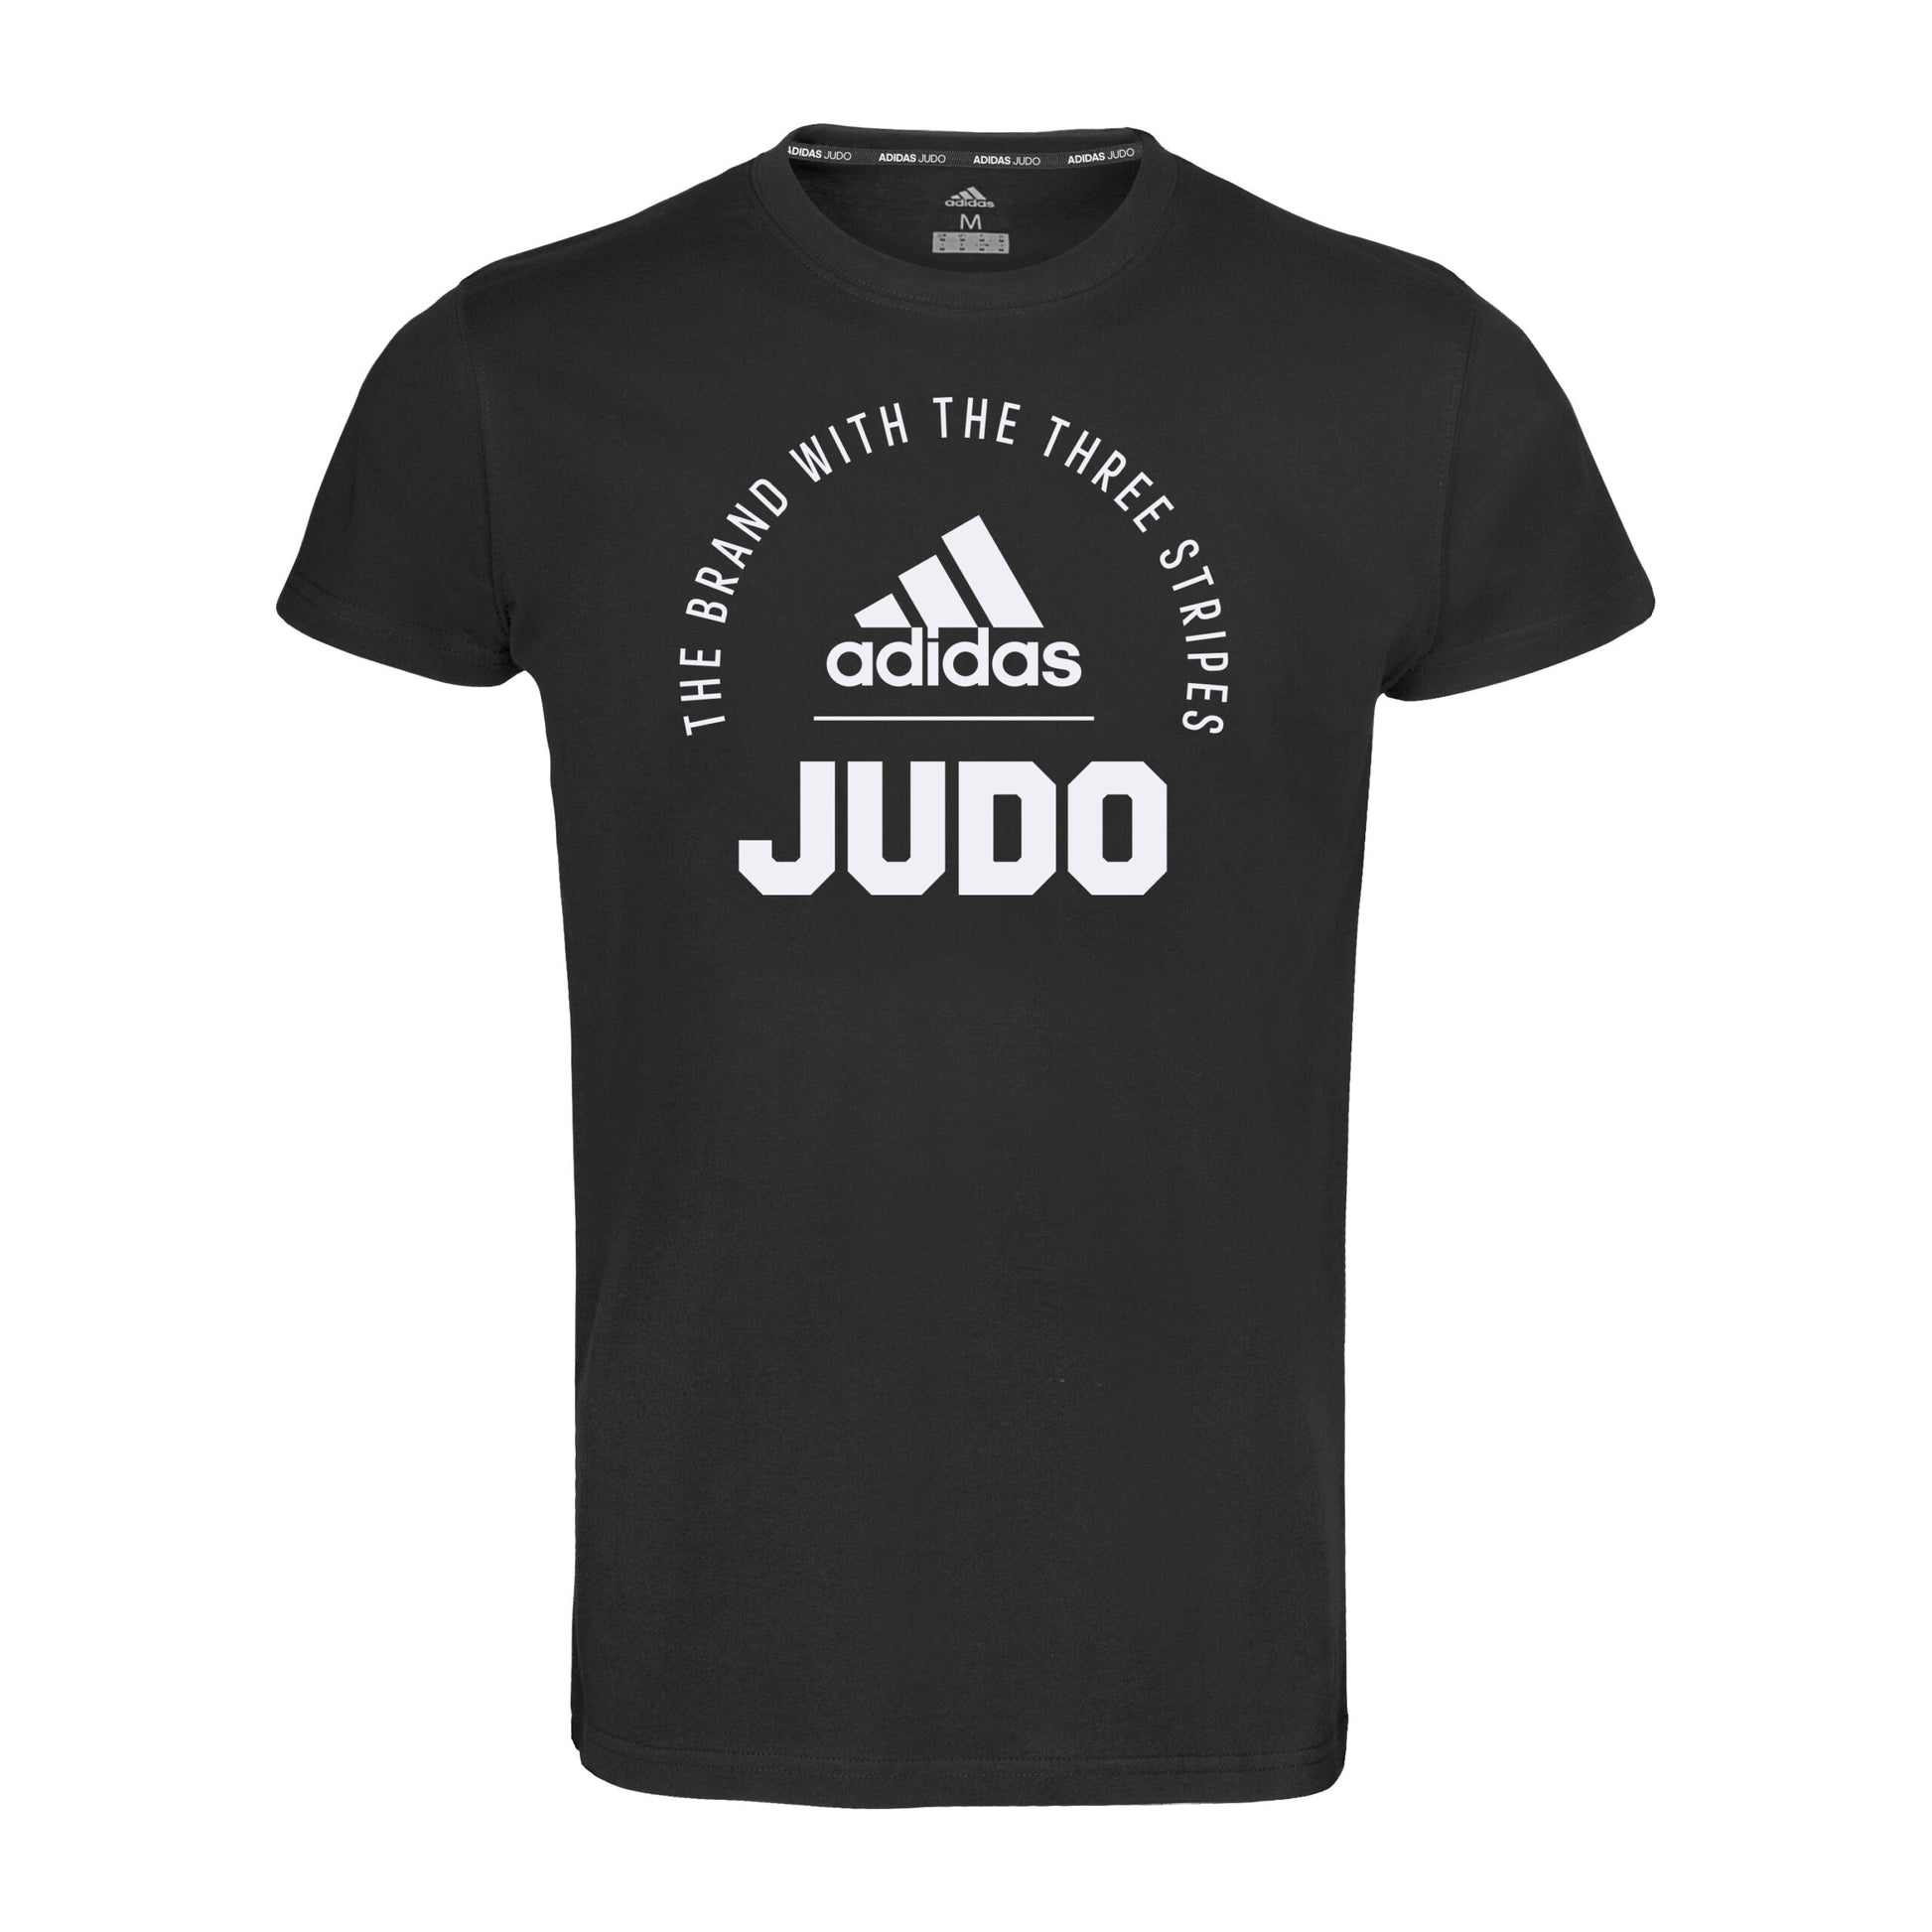 Clts21 J Adidas Judo T Shirt Black 01